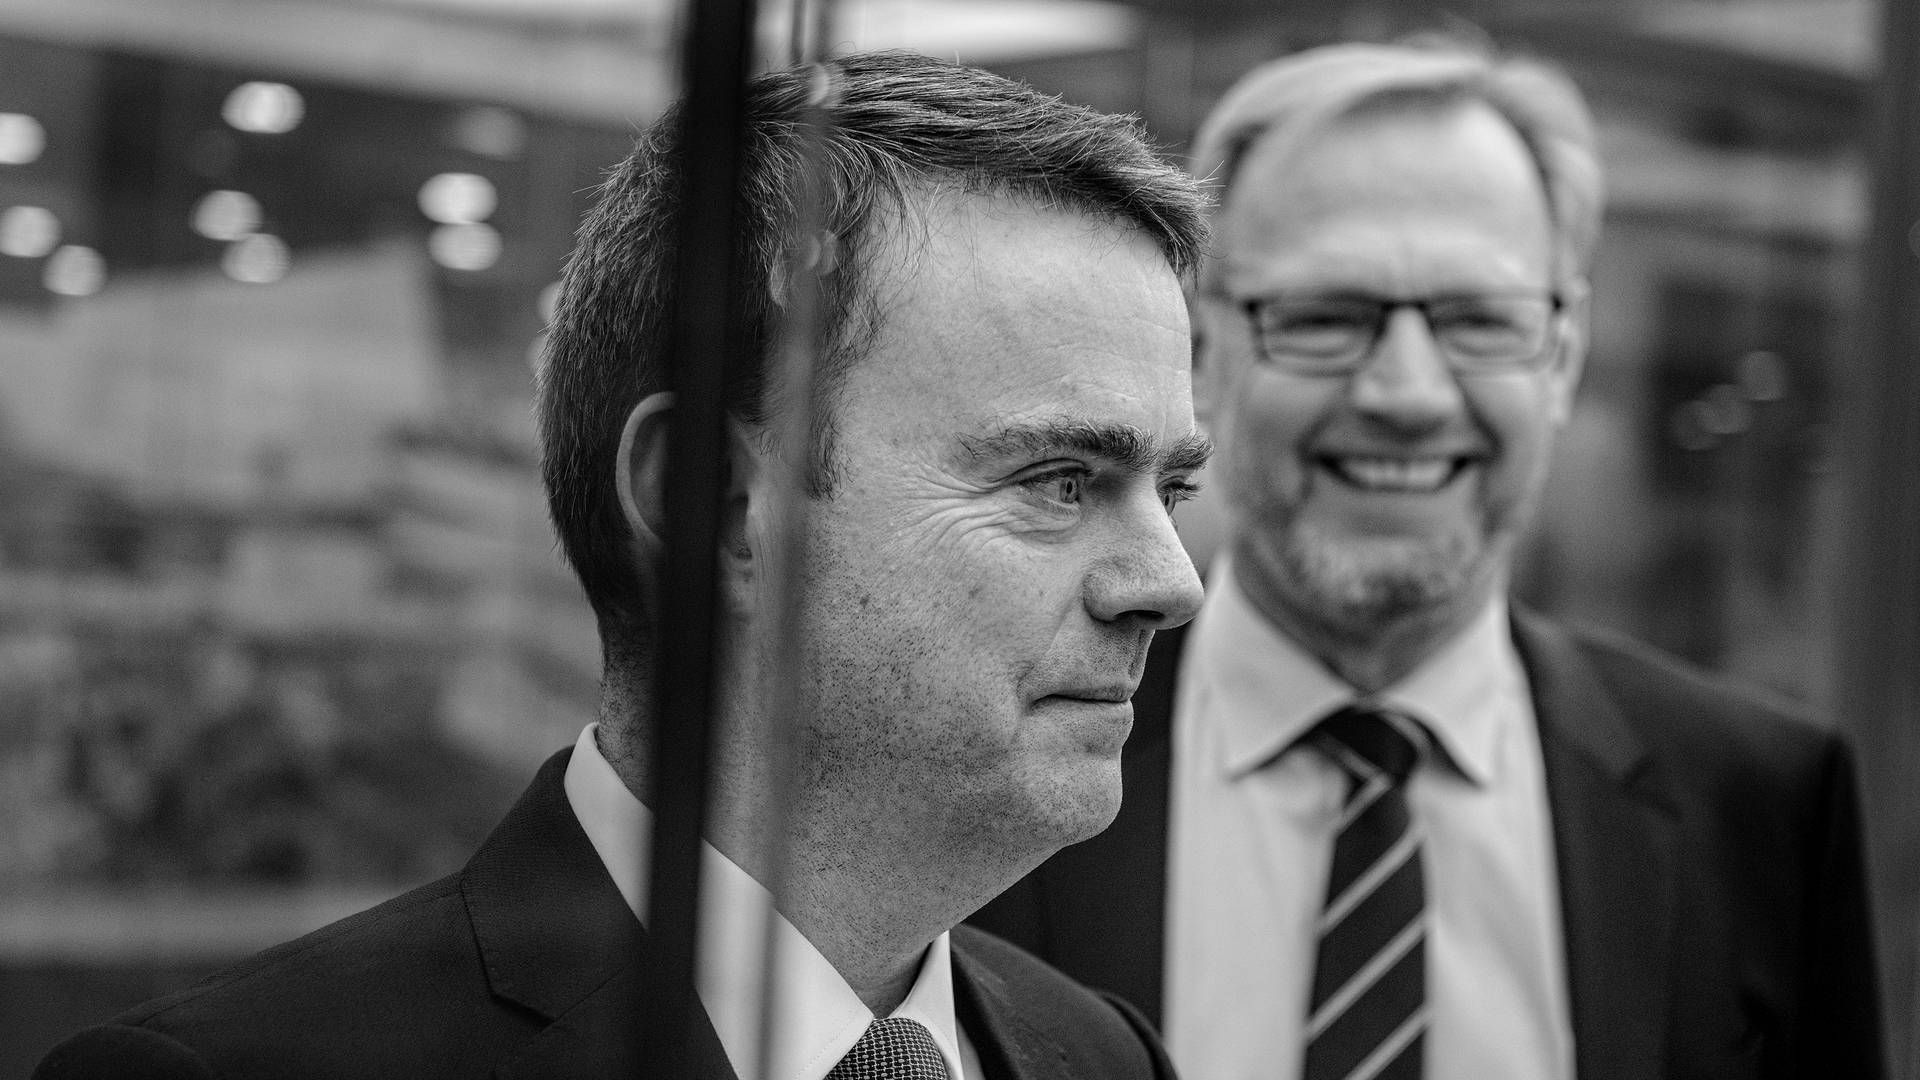 Peter Schleidt Jyske Bank-direktør med ansvar for bankens hvidvaskbekæmpelse. | Foto: Casper Dalhoff/ERH